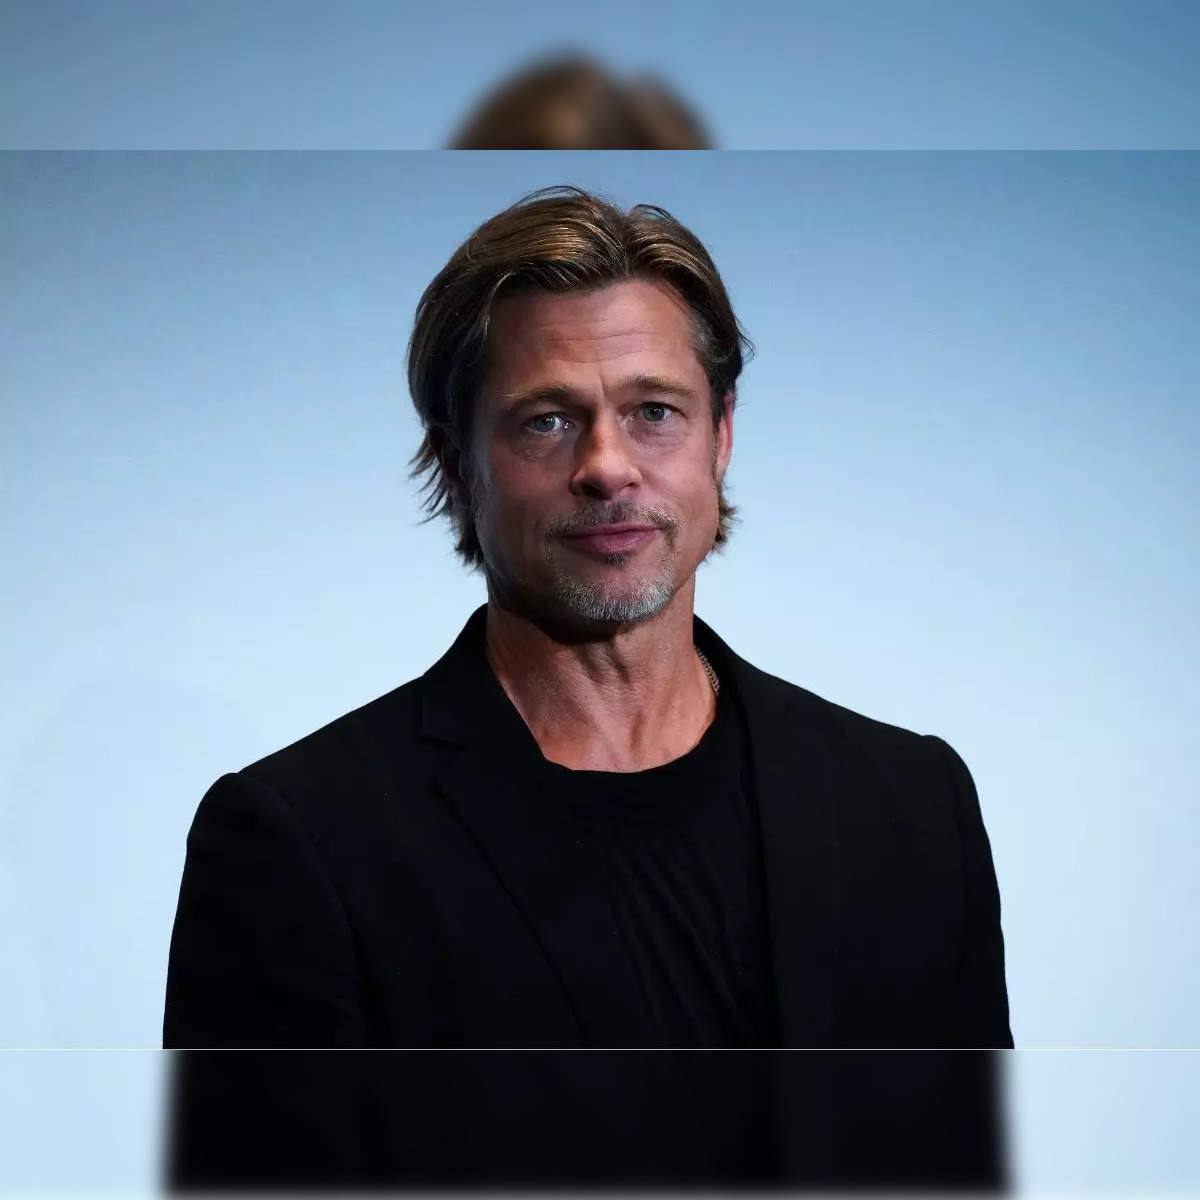 Brad Pitt - Biography